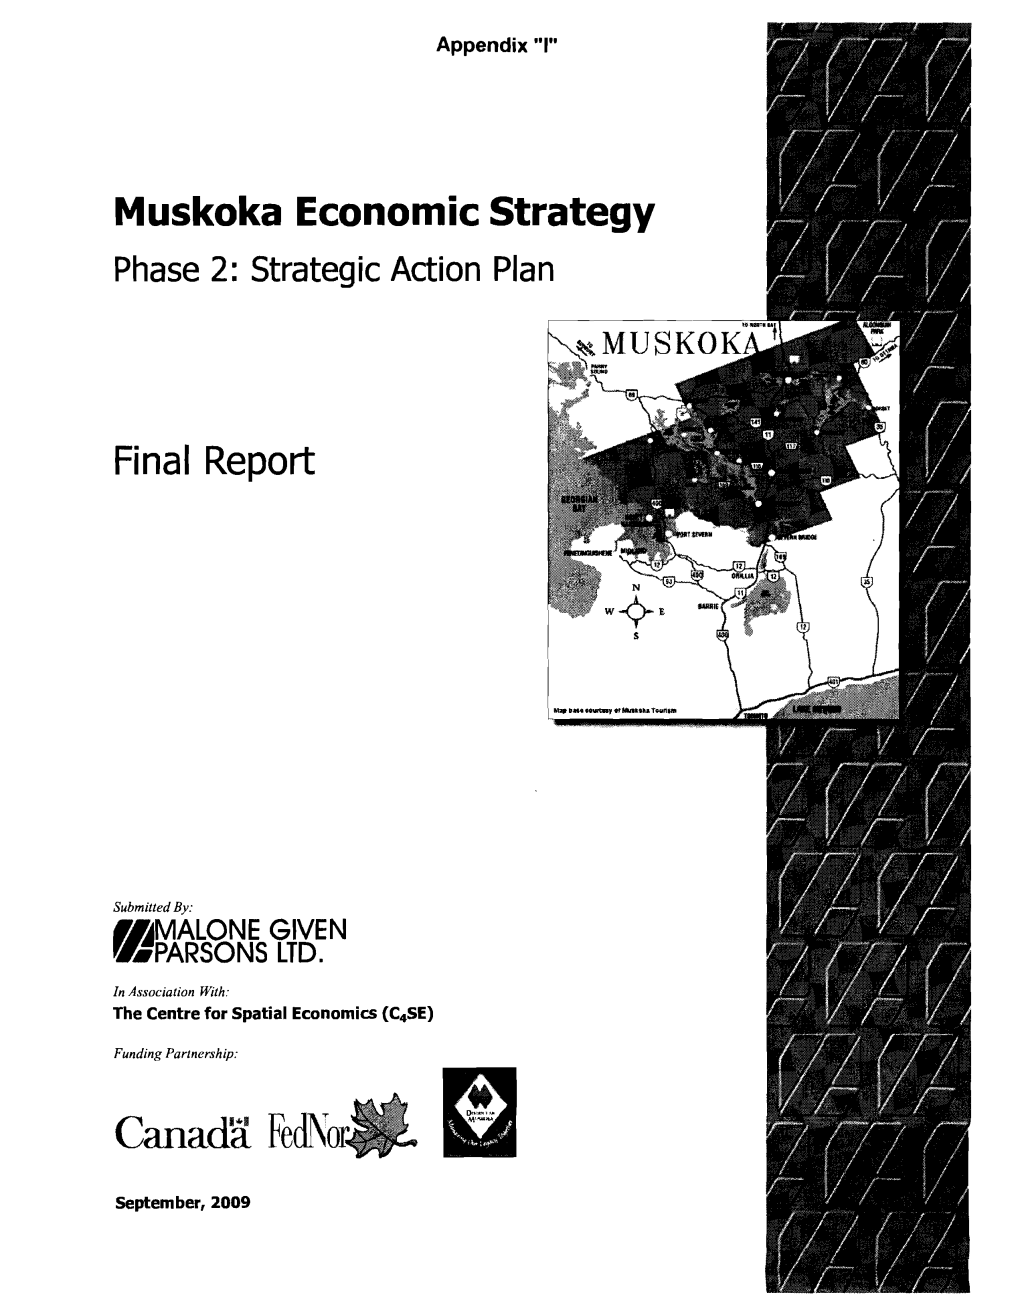 Muskoka Economic Strategy Phase 2: Strategic Action Plan